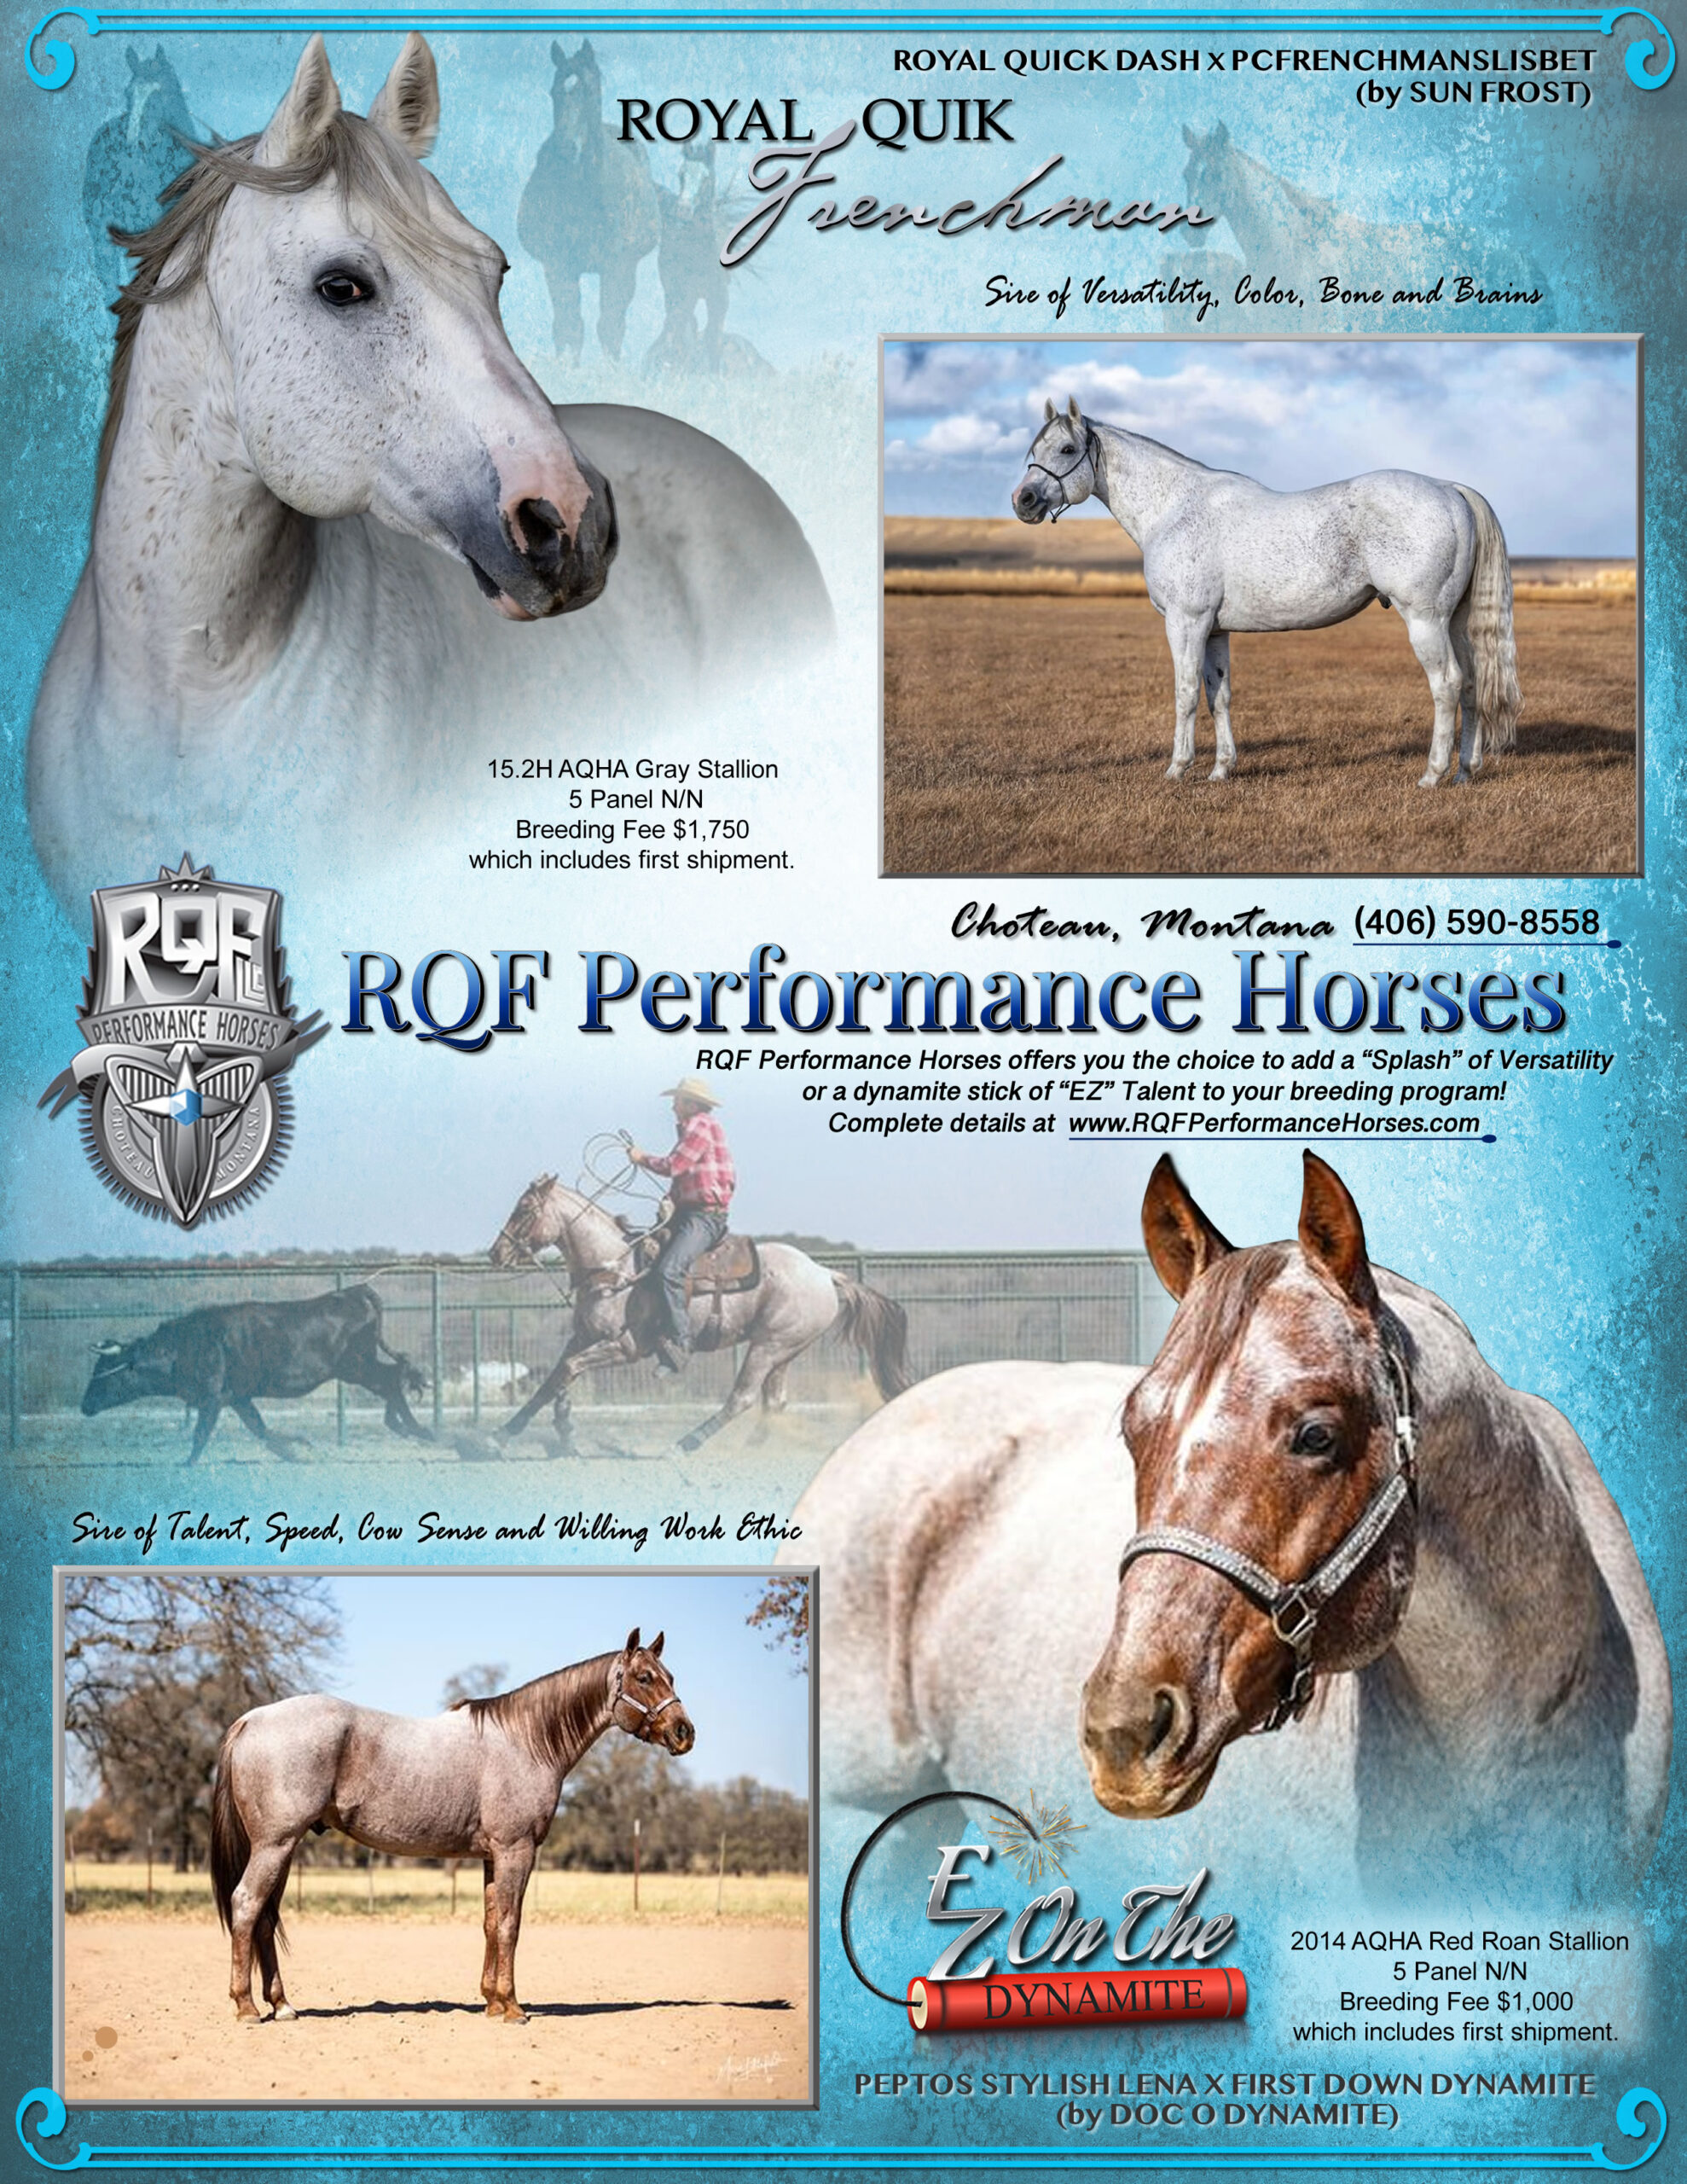 RQF Performance Horses Stallion line up